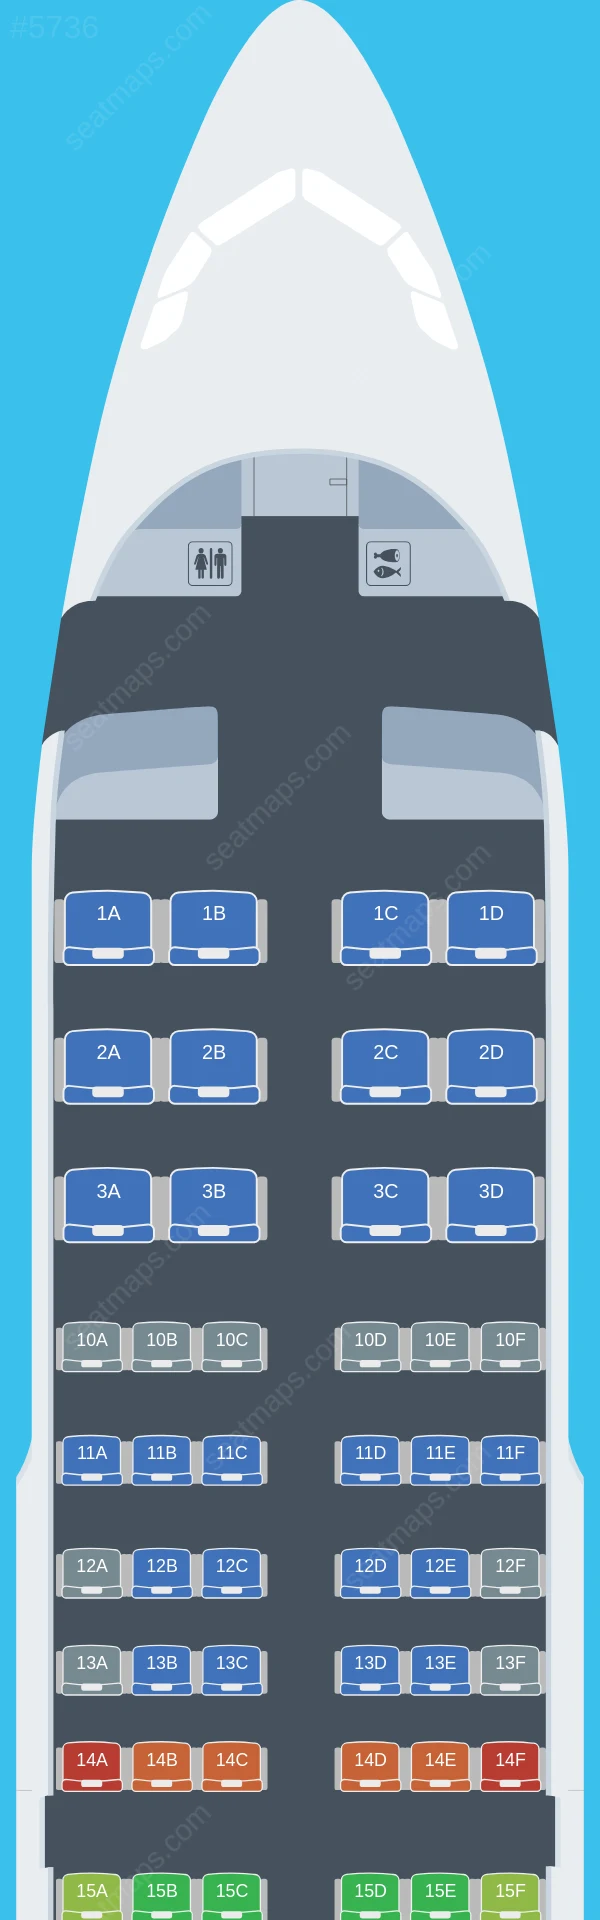 Delta Airbus A319-100 seatmap preview